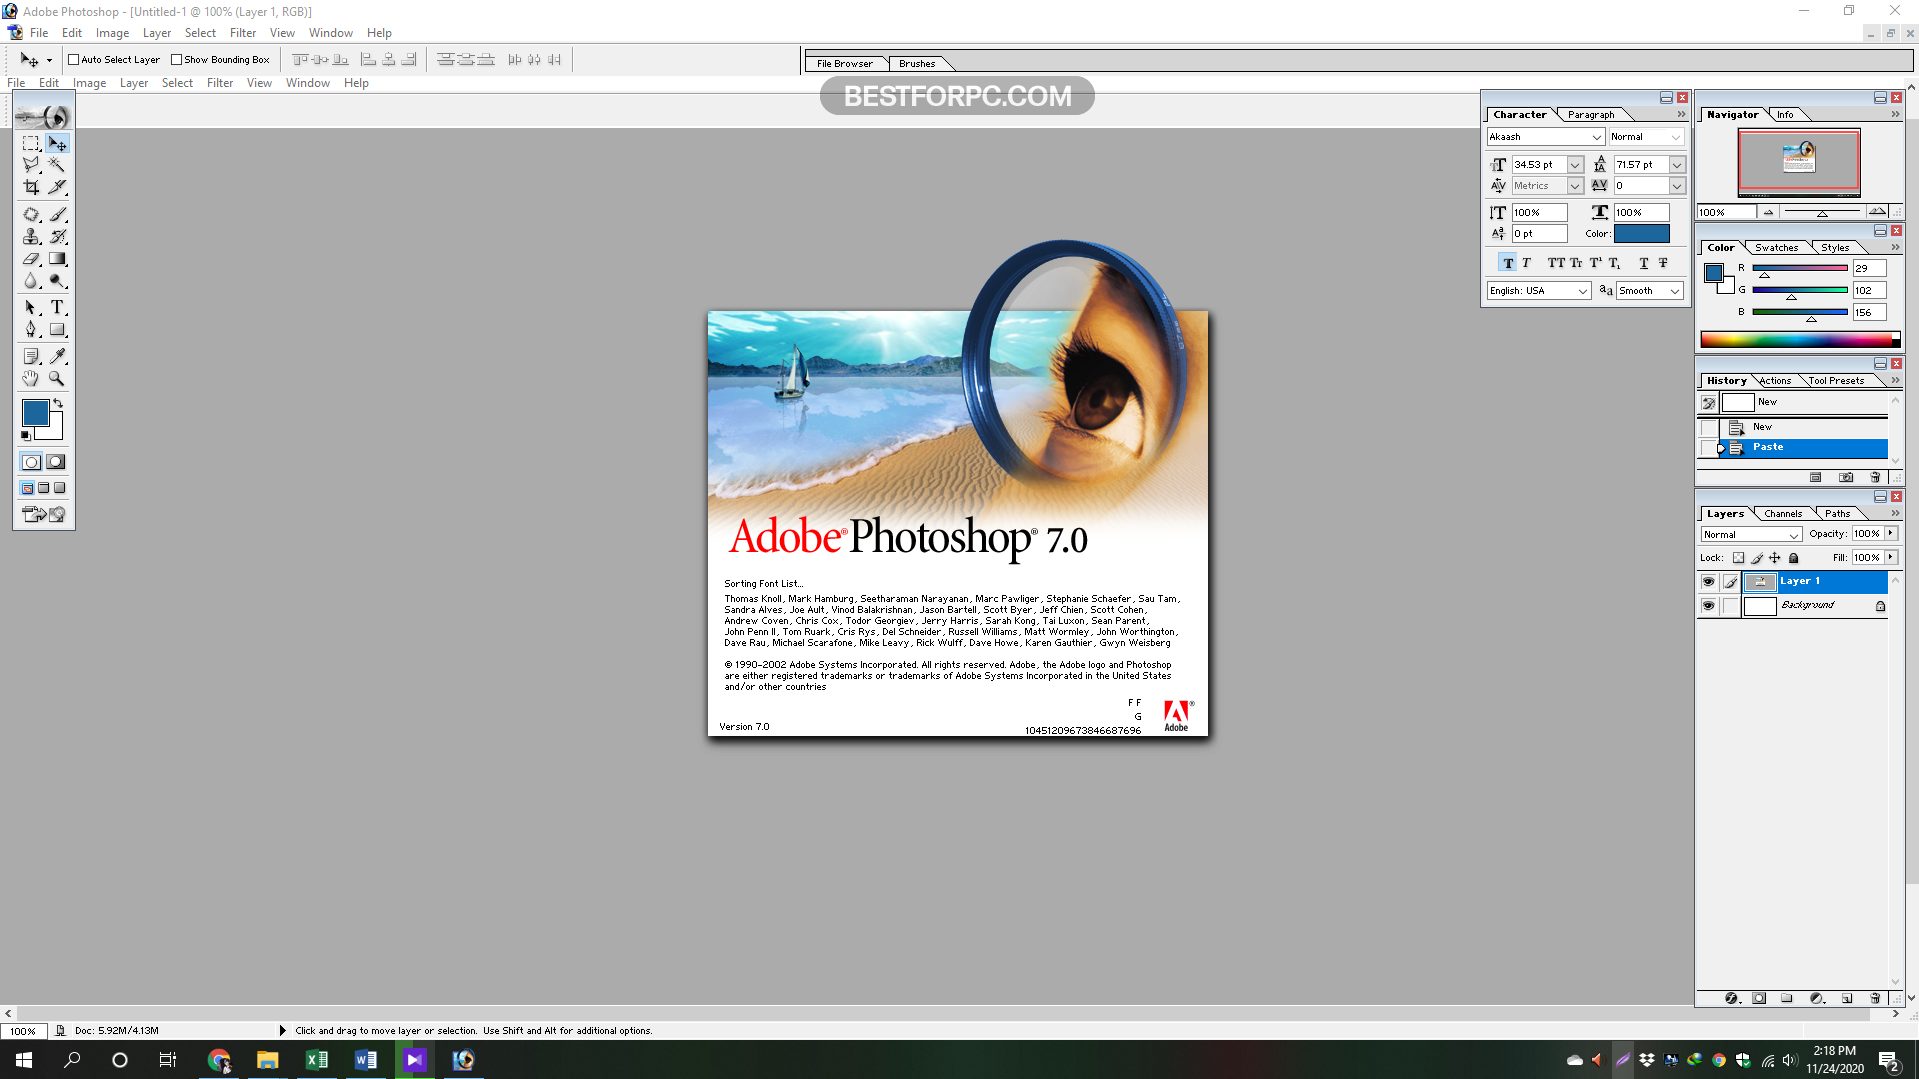 adobe photoshop 7.0 full version free download windows 8